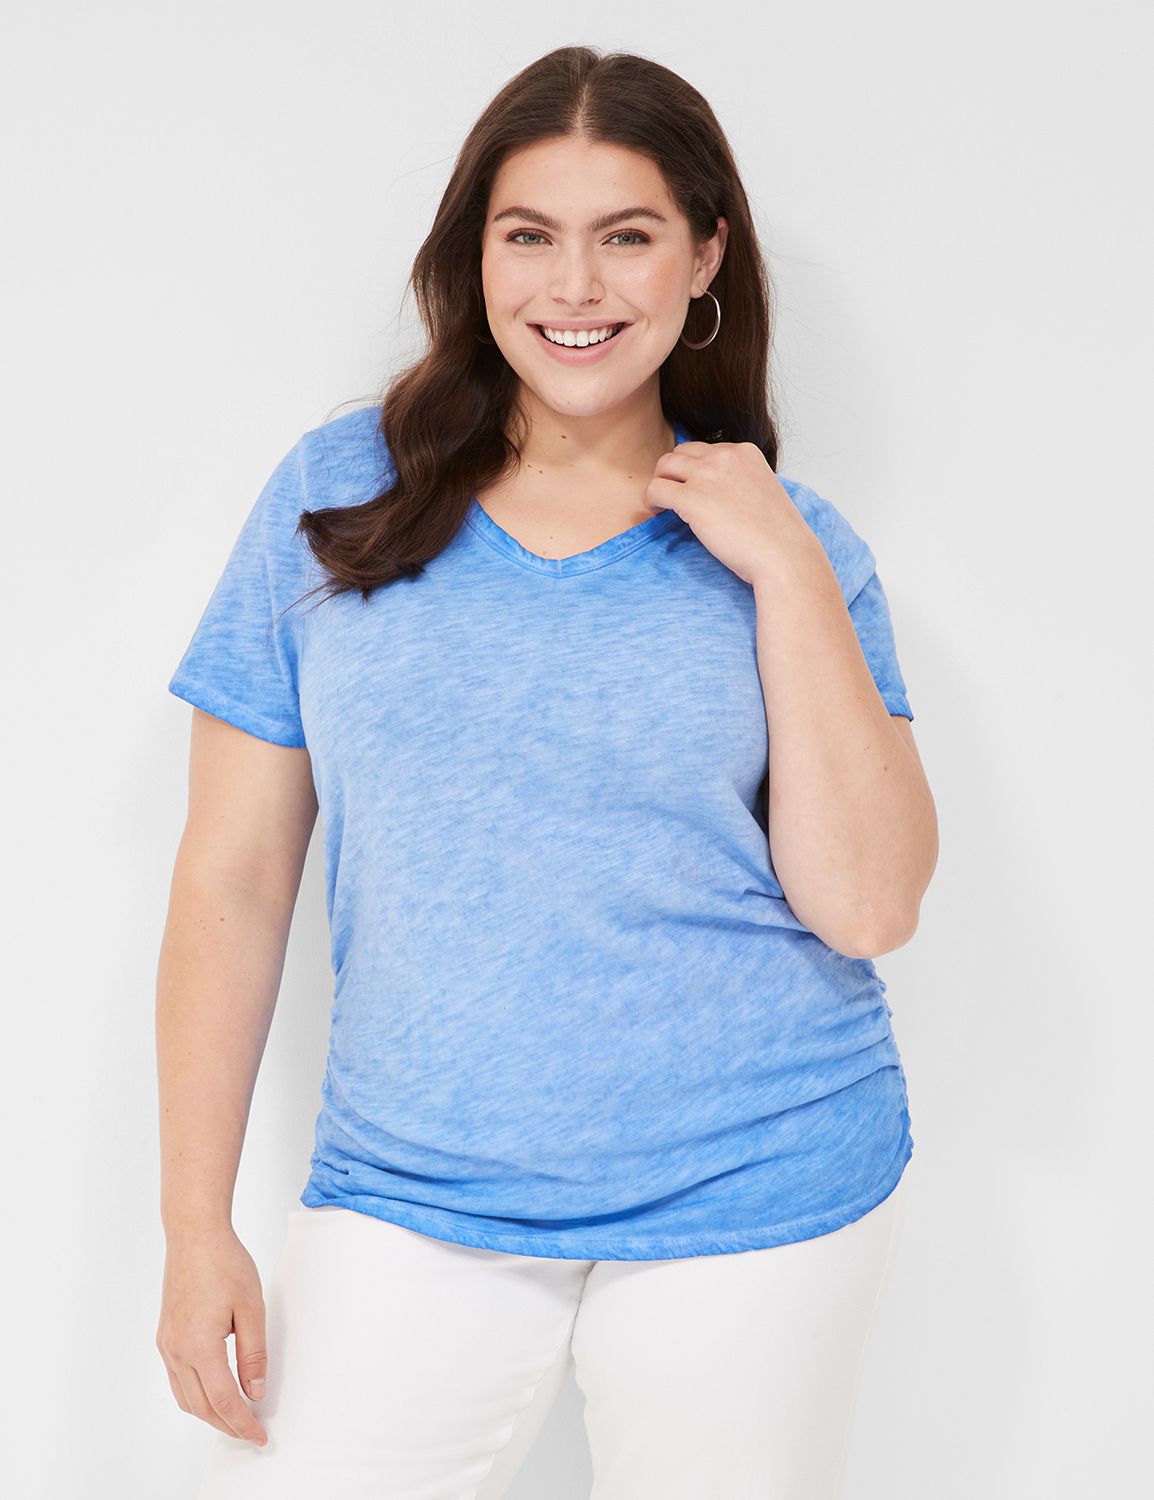 SHOWMALL Women Plus Size Tops Short Sleeve Tunic Side Slit Shirt Summer  V-Neck Blouse Navy Blue 2X Tops 